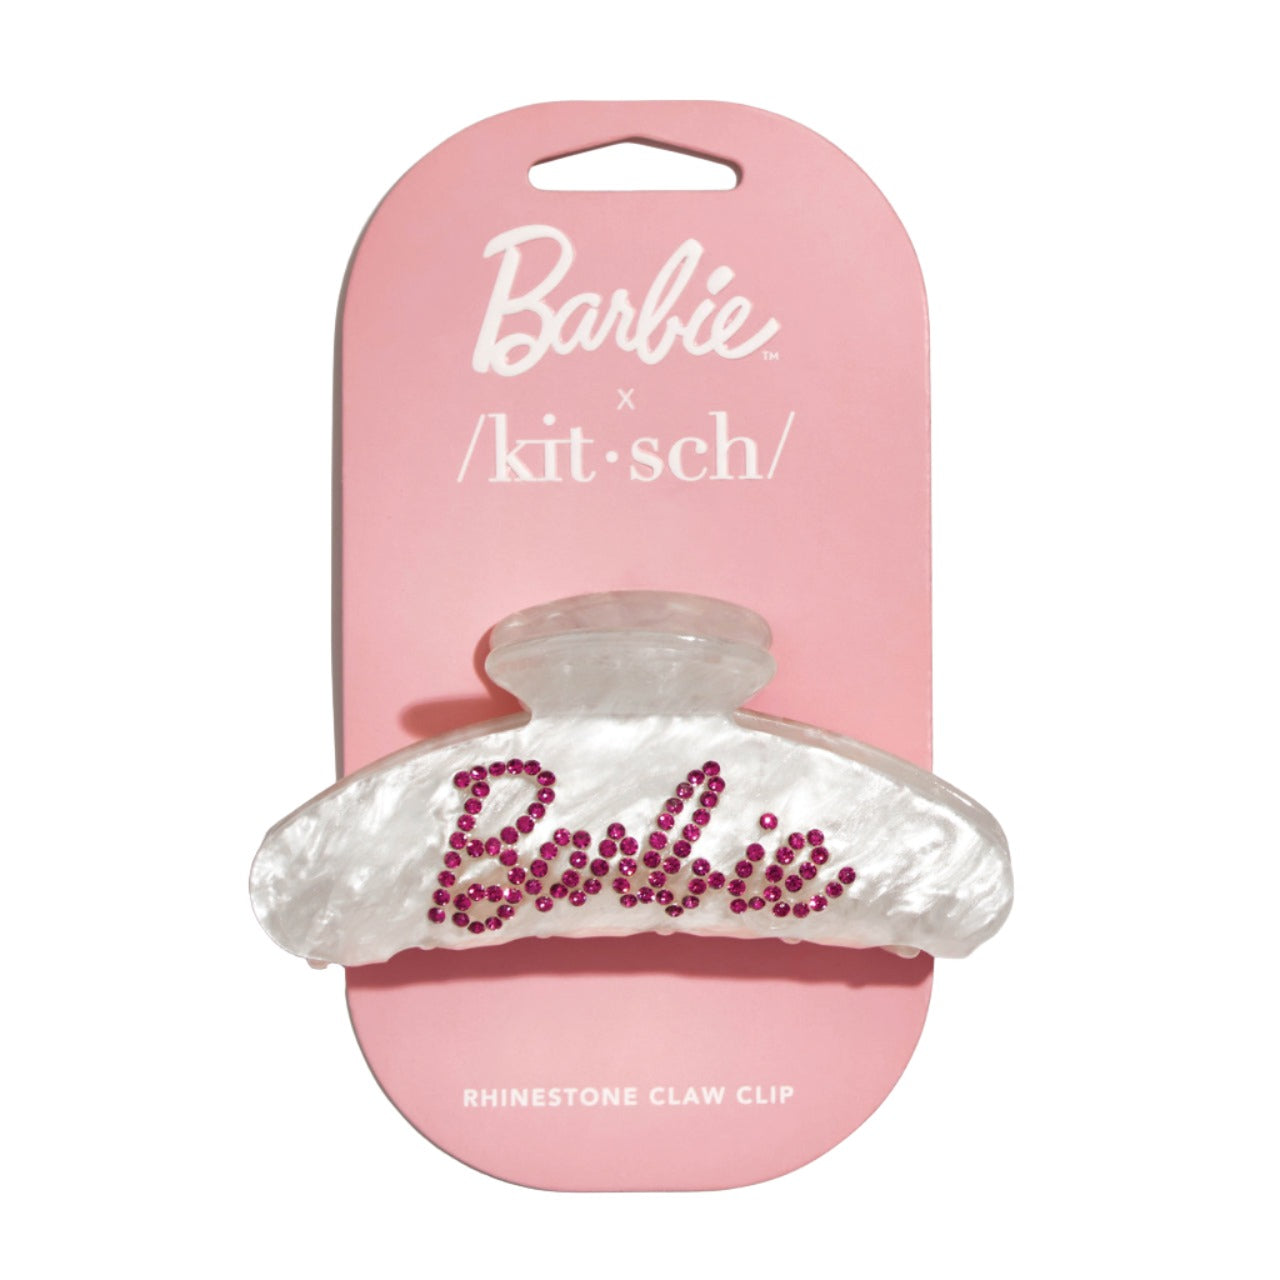 Barbie x Kitsch Rhinestone Claw Clip - HoneyBug 